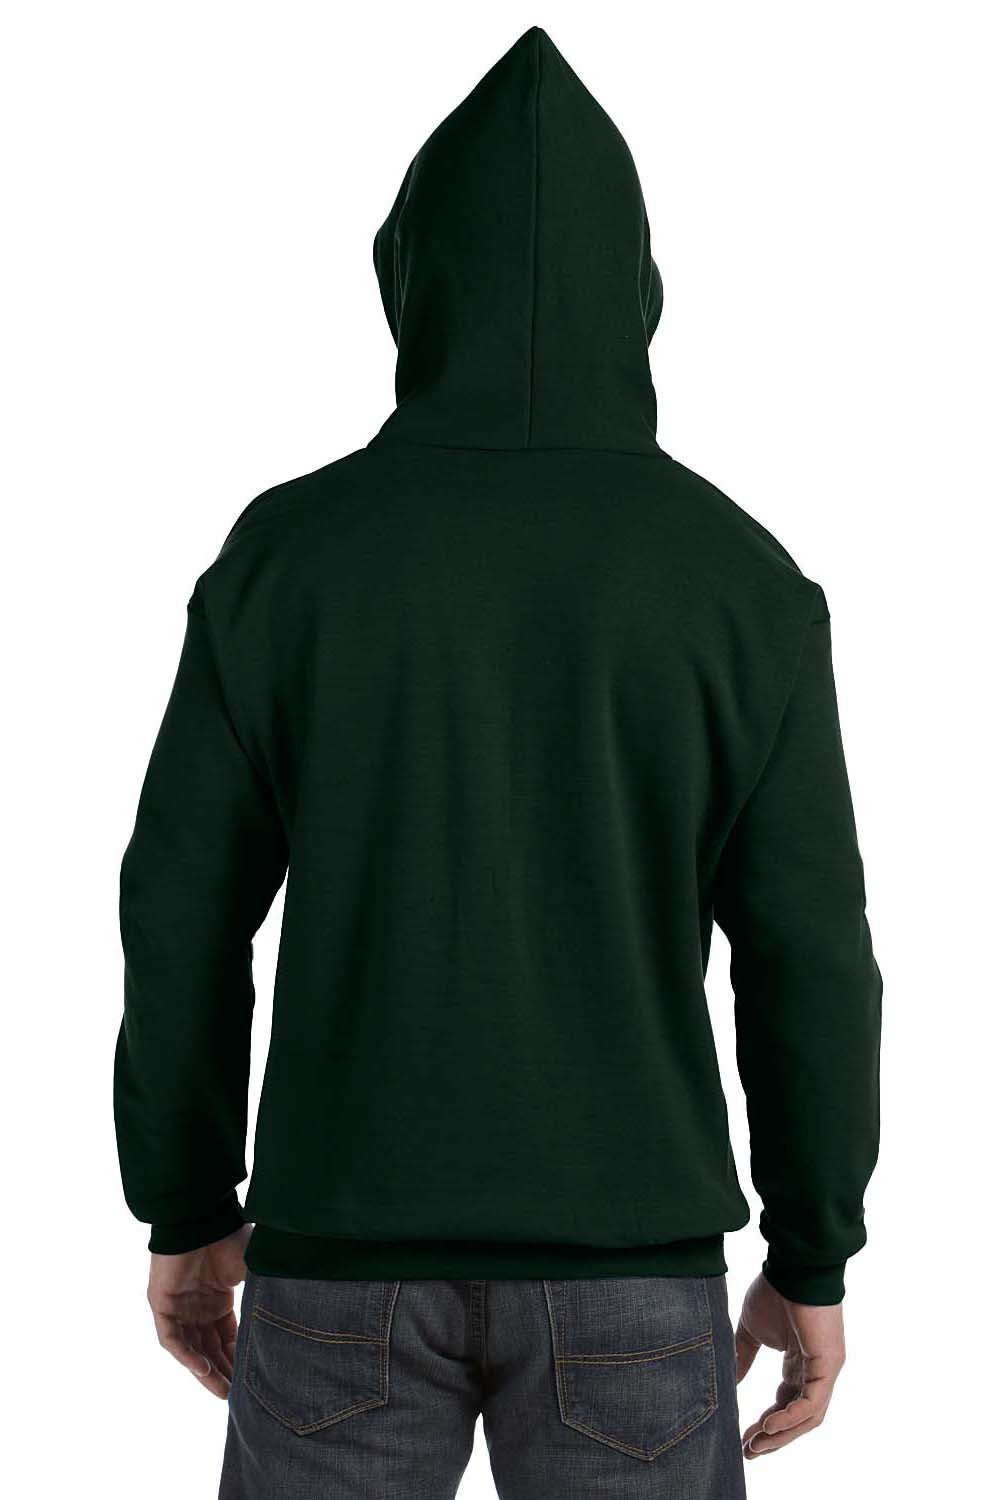 Hanes P170 Mens EcoSmart Print Pro XP Hooded Sweatshirt Hoodie Forest Green Back